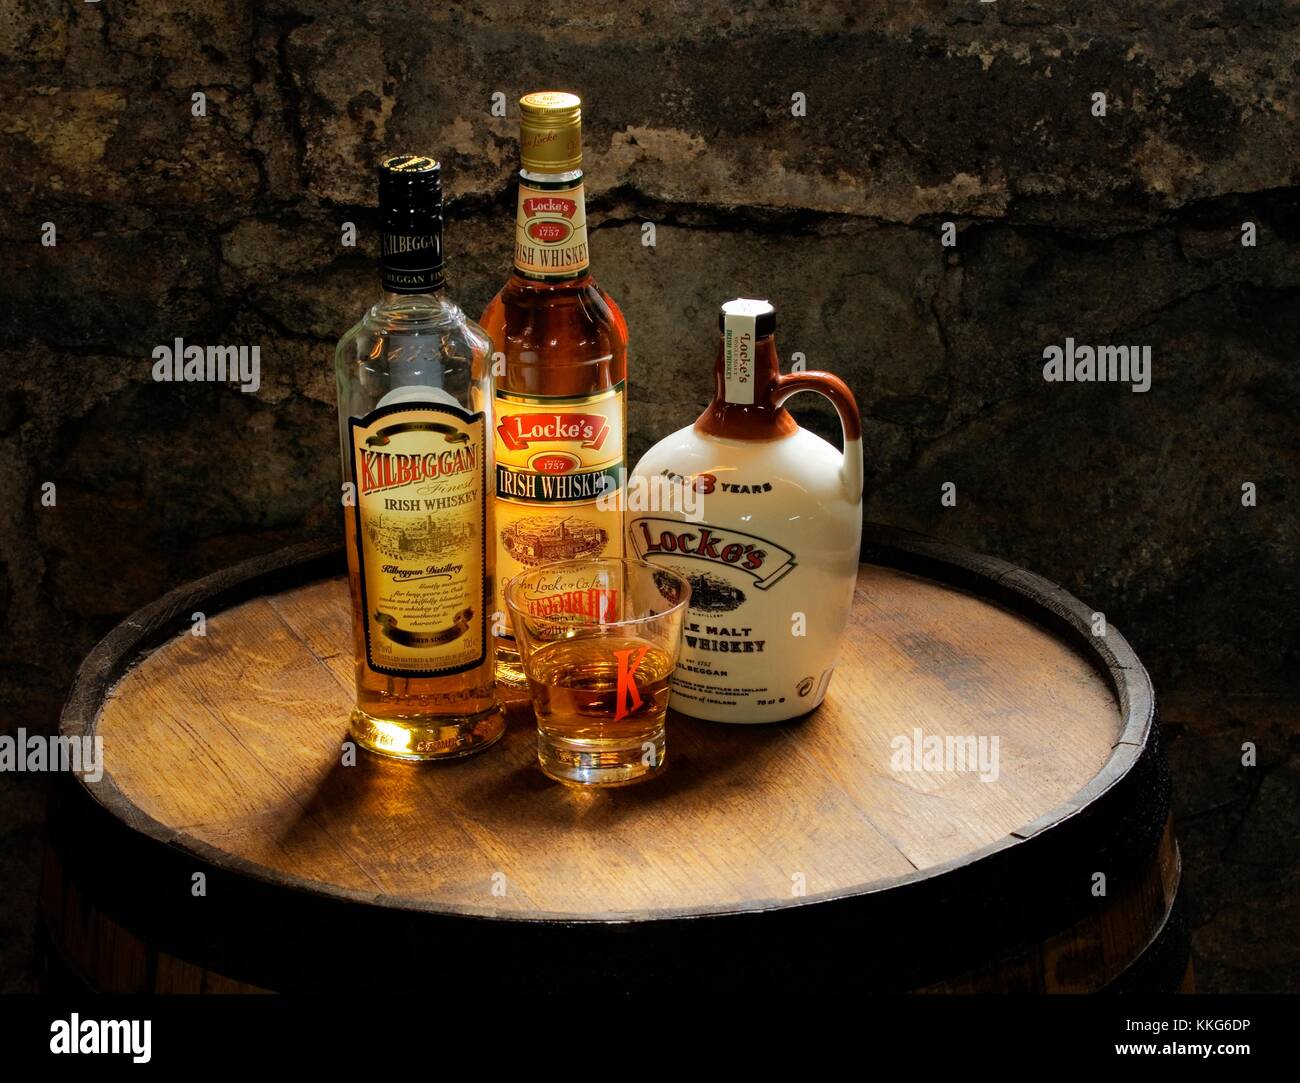 Lockes and Kilbeggan Irish Whiskey brands made at Locke’s Distillery, one of Ireland’s oldest, in Westmeath town of Kilbeggan. Stock Photo